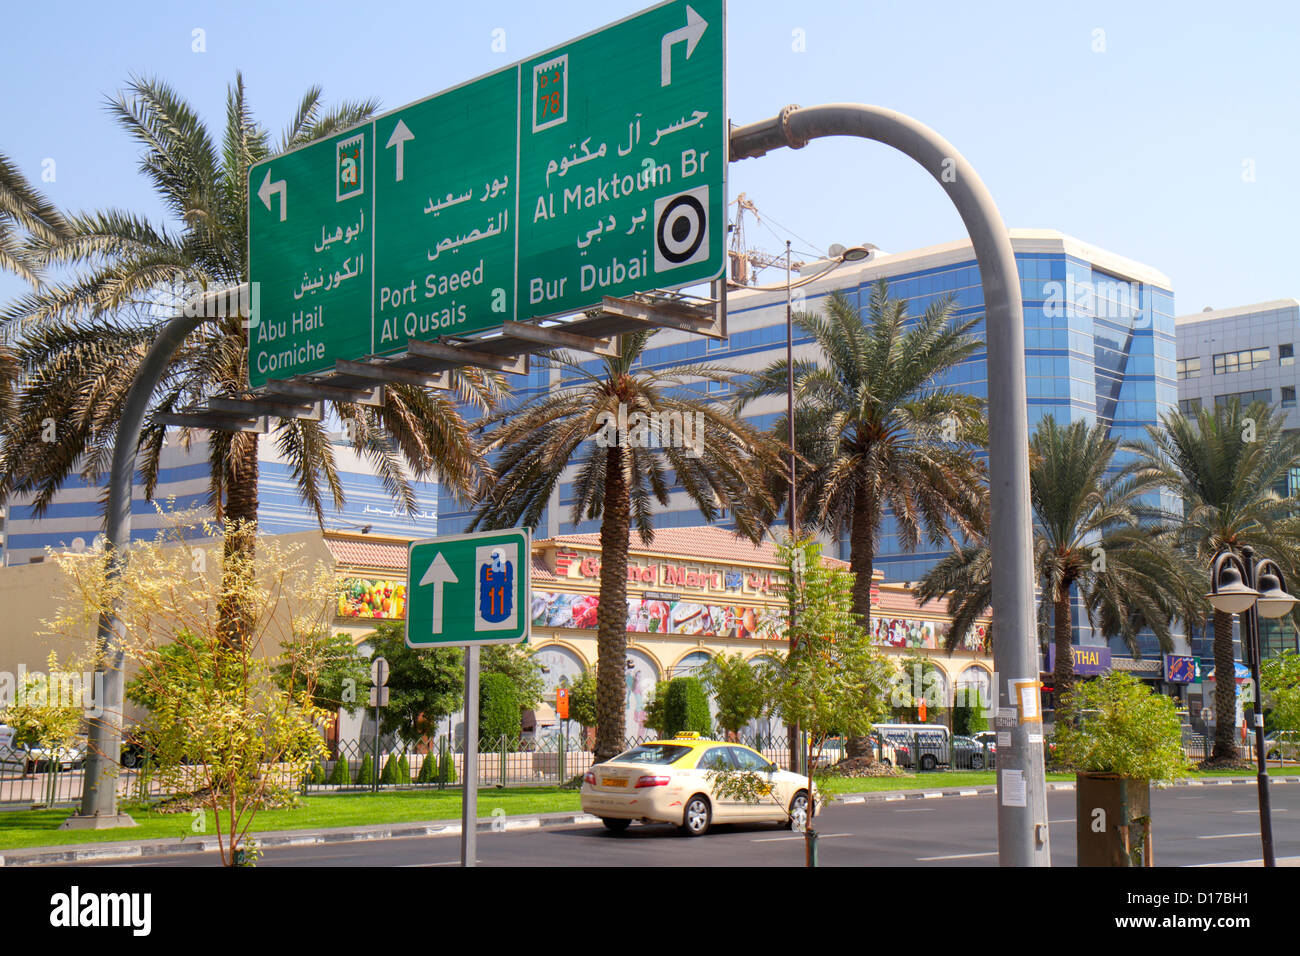 Dubai UAE,Emirati Arabi Uniti,Deira,al Muraqqabat Road,indicazioni,indicazioni,frecce,taxi,taxi,taxi,taxi,taxi,inglese,arabo,lingua,bilingue,UAE121012023 Foto Stock